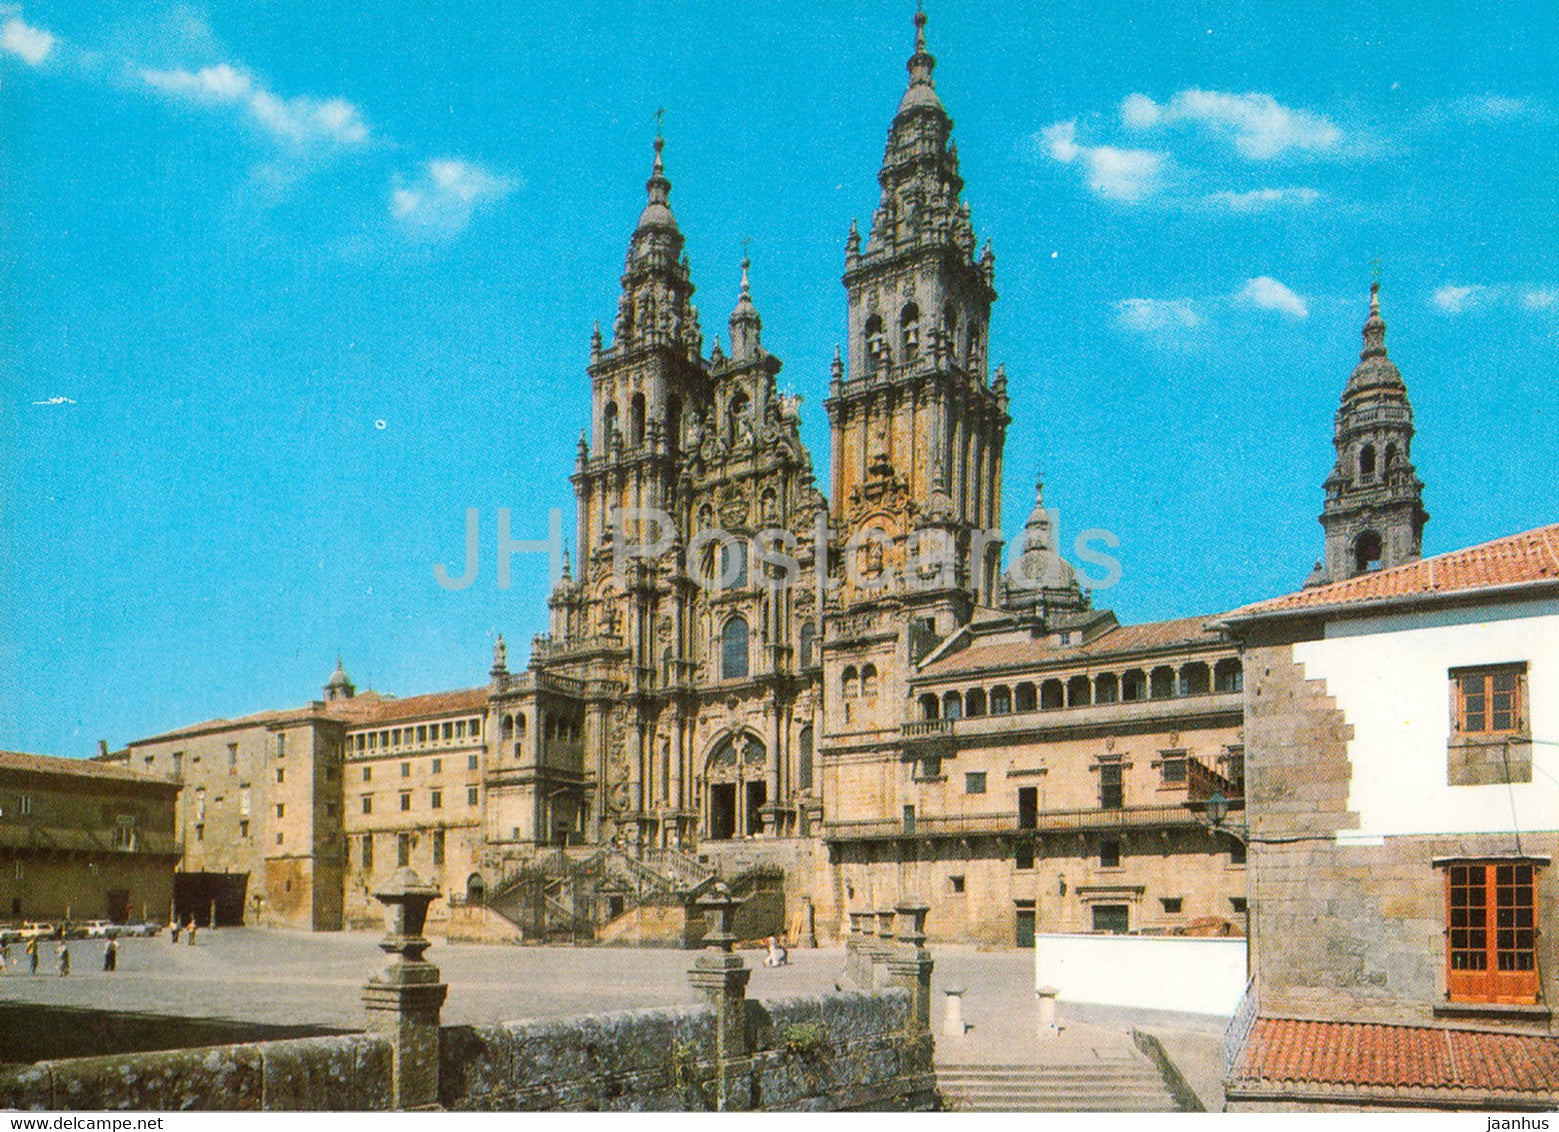 Santiago de Compostela - La Catedral - Fachada del Obradoiro - Cathedral - The Obradoiro Facade - 3232 - Spain - unused - JH Postcards